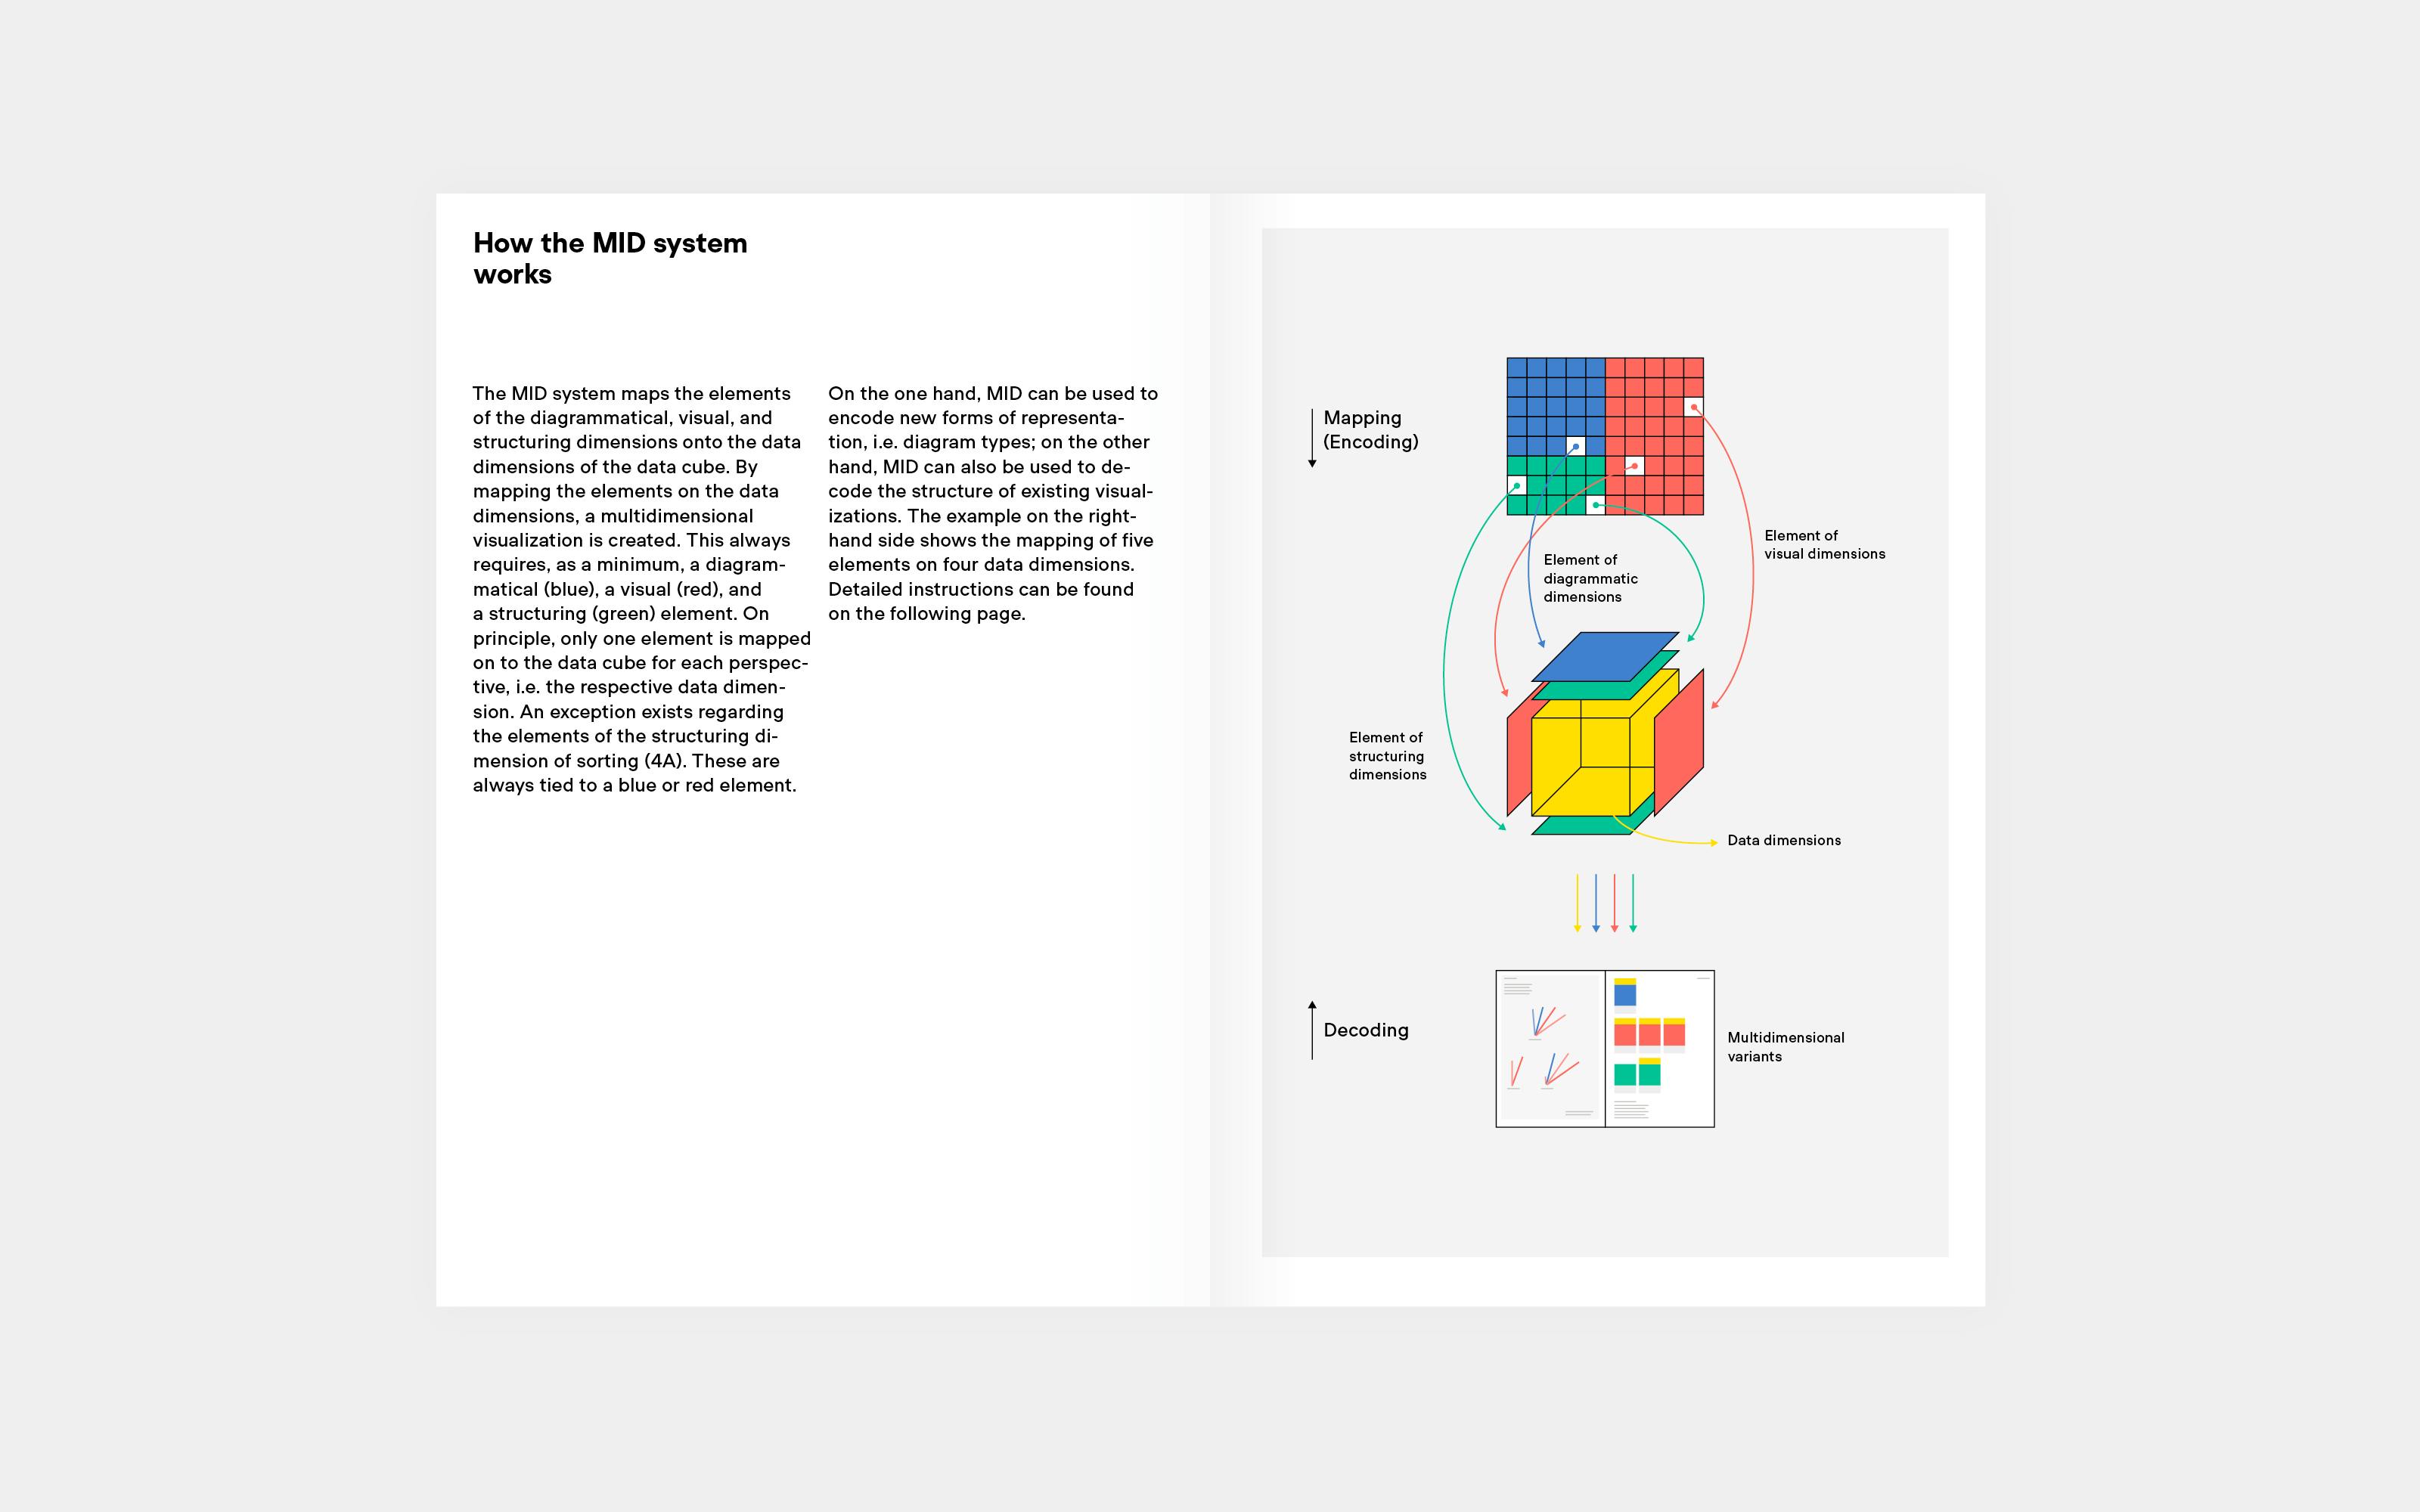 Superdot Studio Visualizing Complexity Handbuch modulares Informationsdesign MID